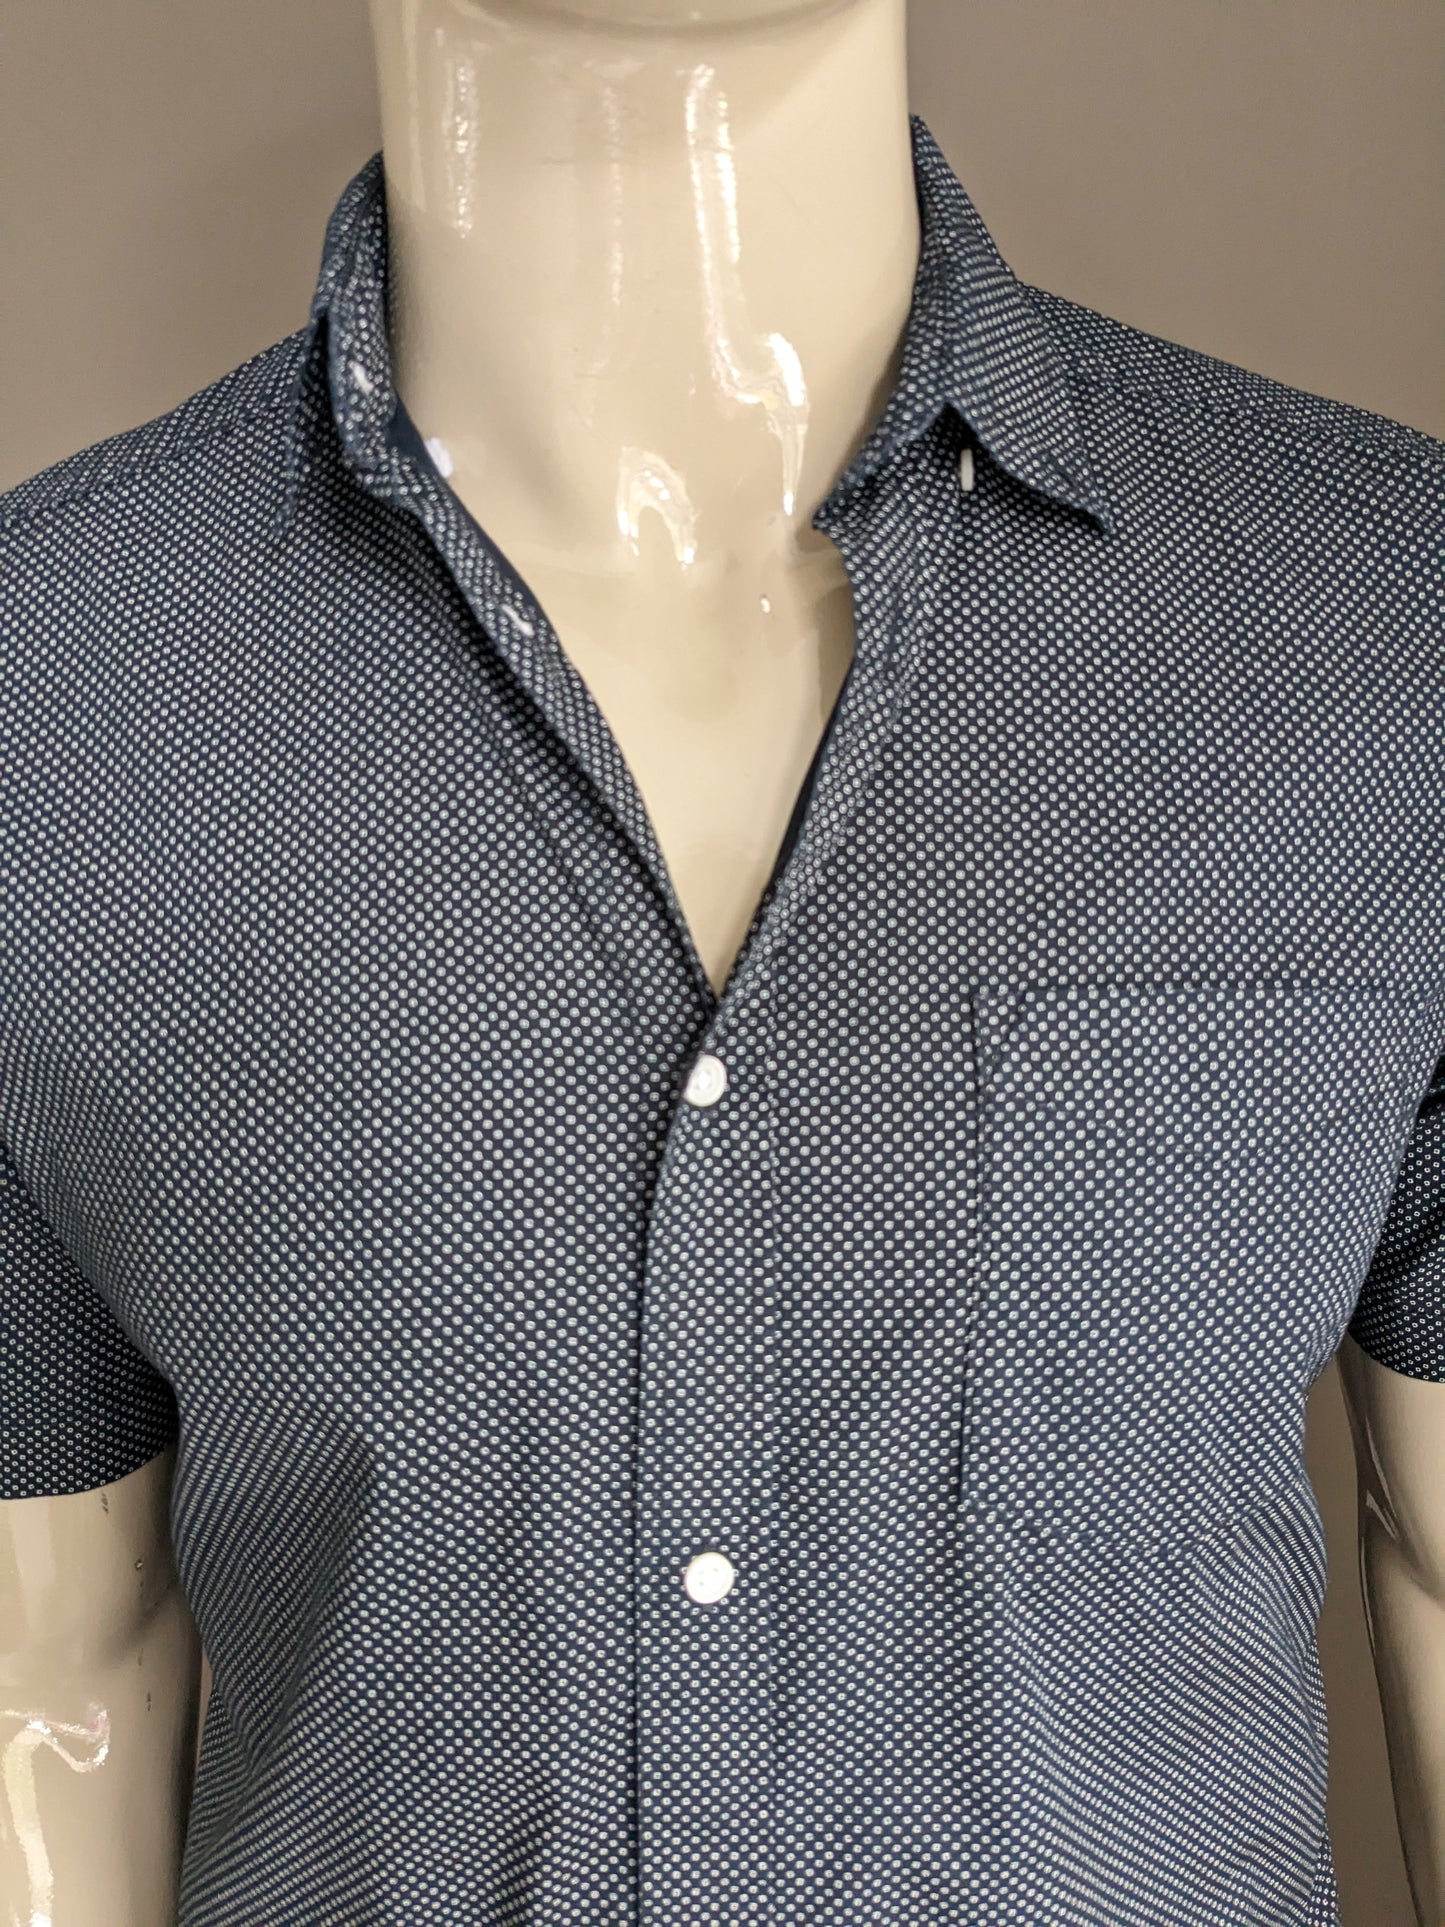 Kiabi shirt short sleeve. Dark blue white print. Size M. Fitted.